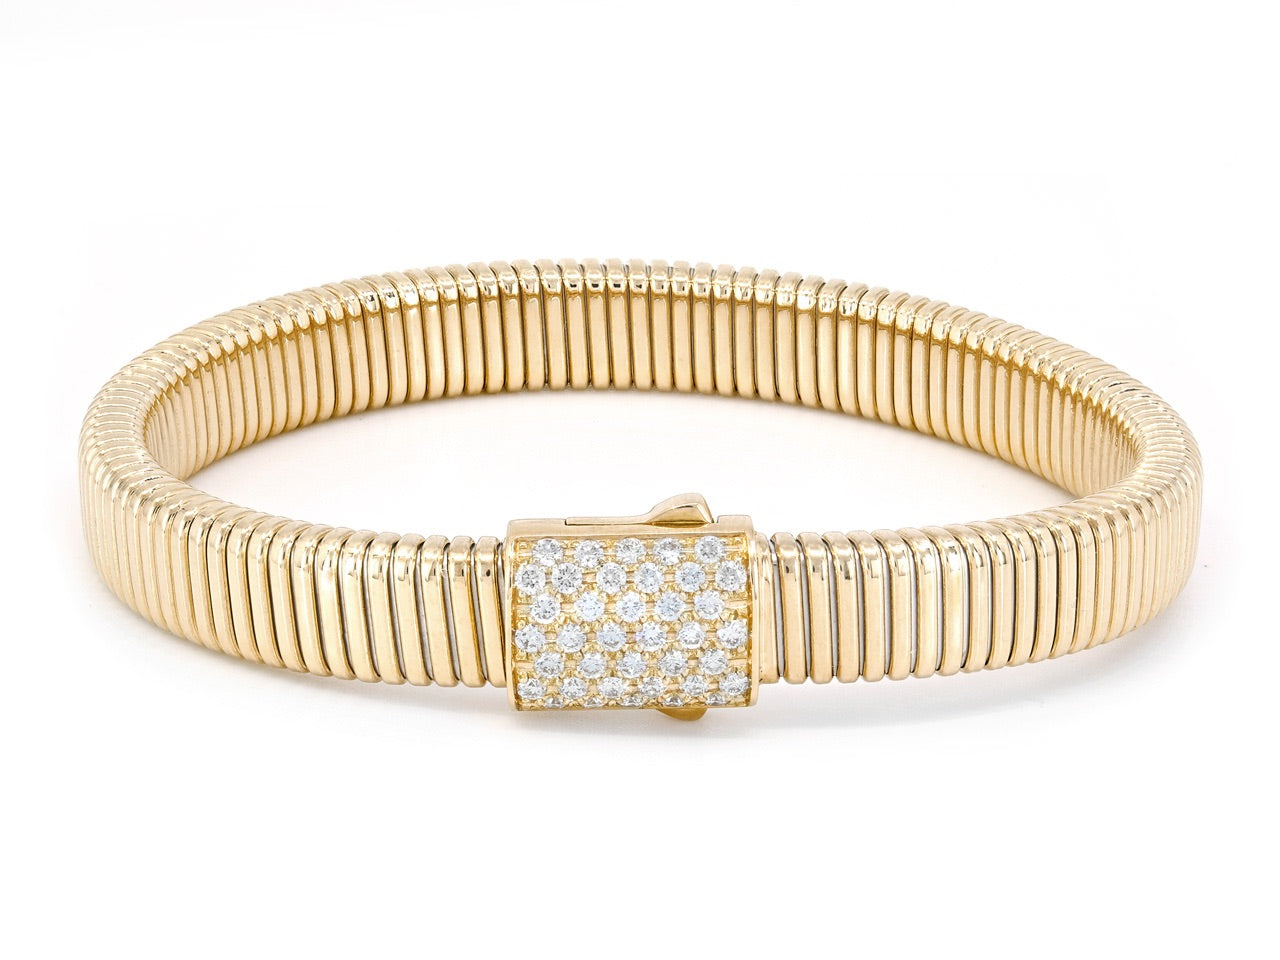 Beladora Diamond Tubogas Bracelet in 18K Gold